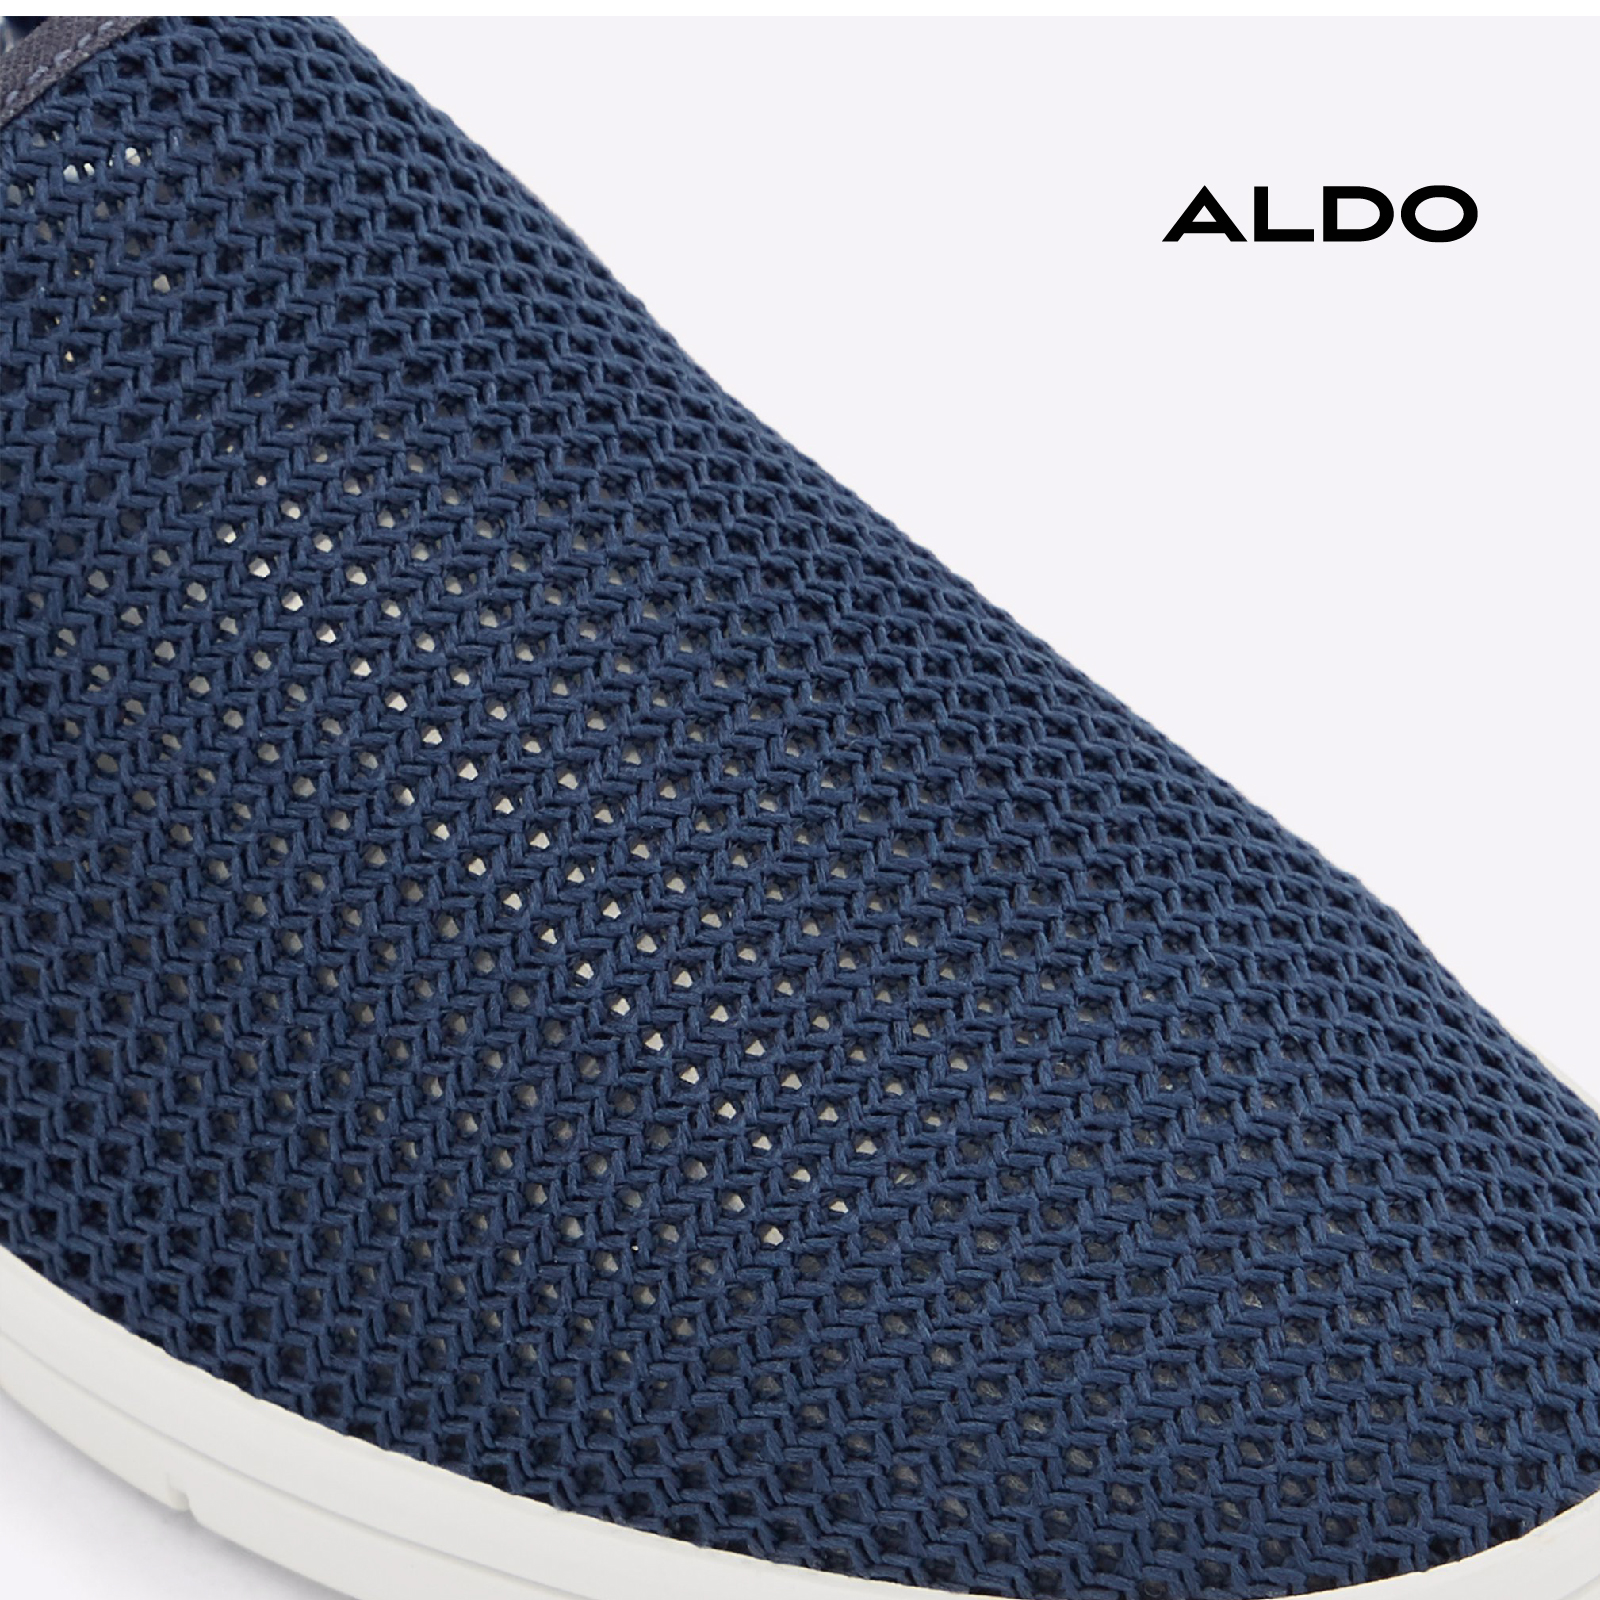 Giày lười LIBERACE Aldo